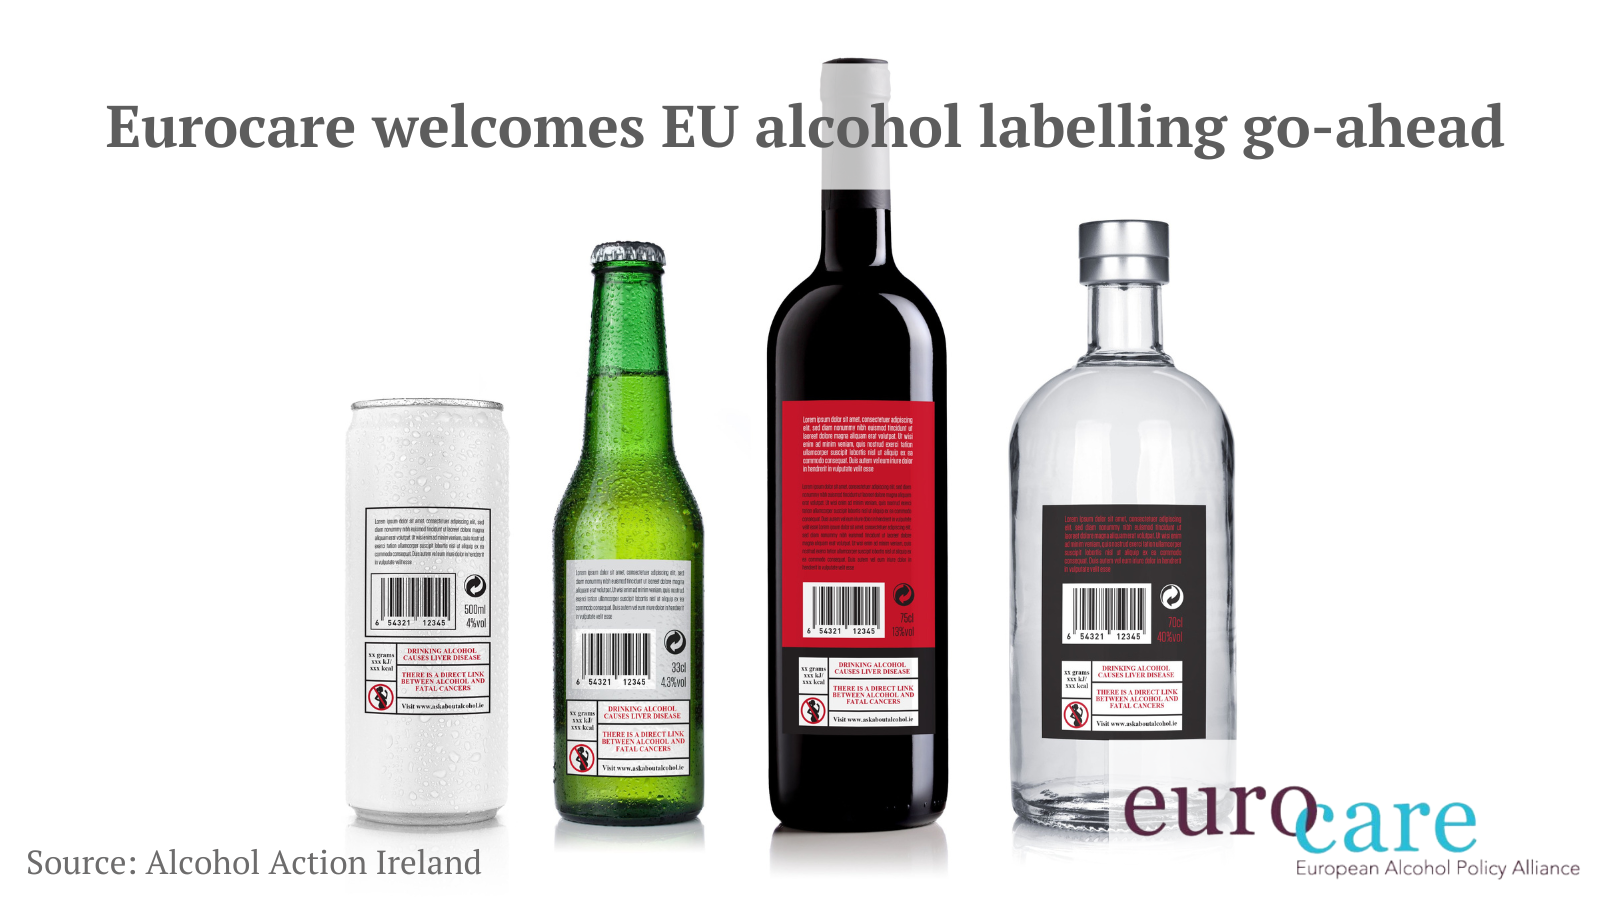 Eurocare welcomes EU alcohol labelling go-ahead